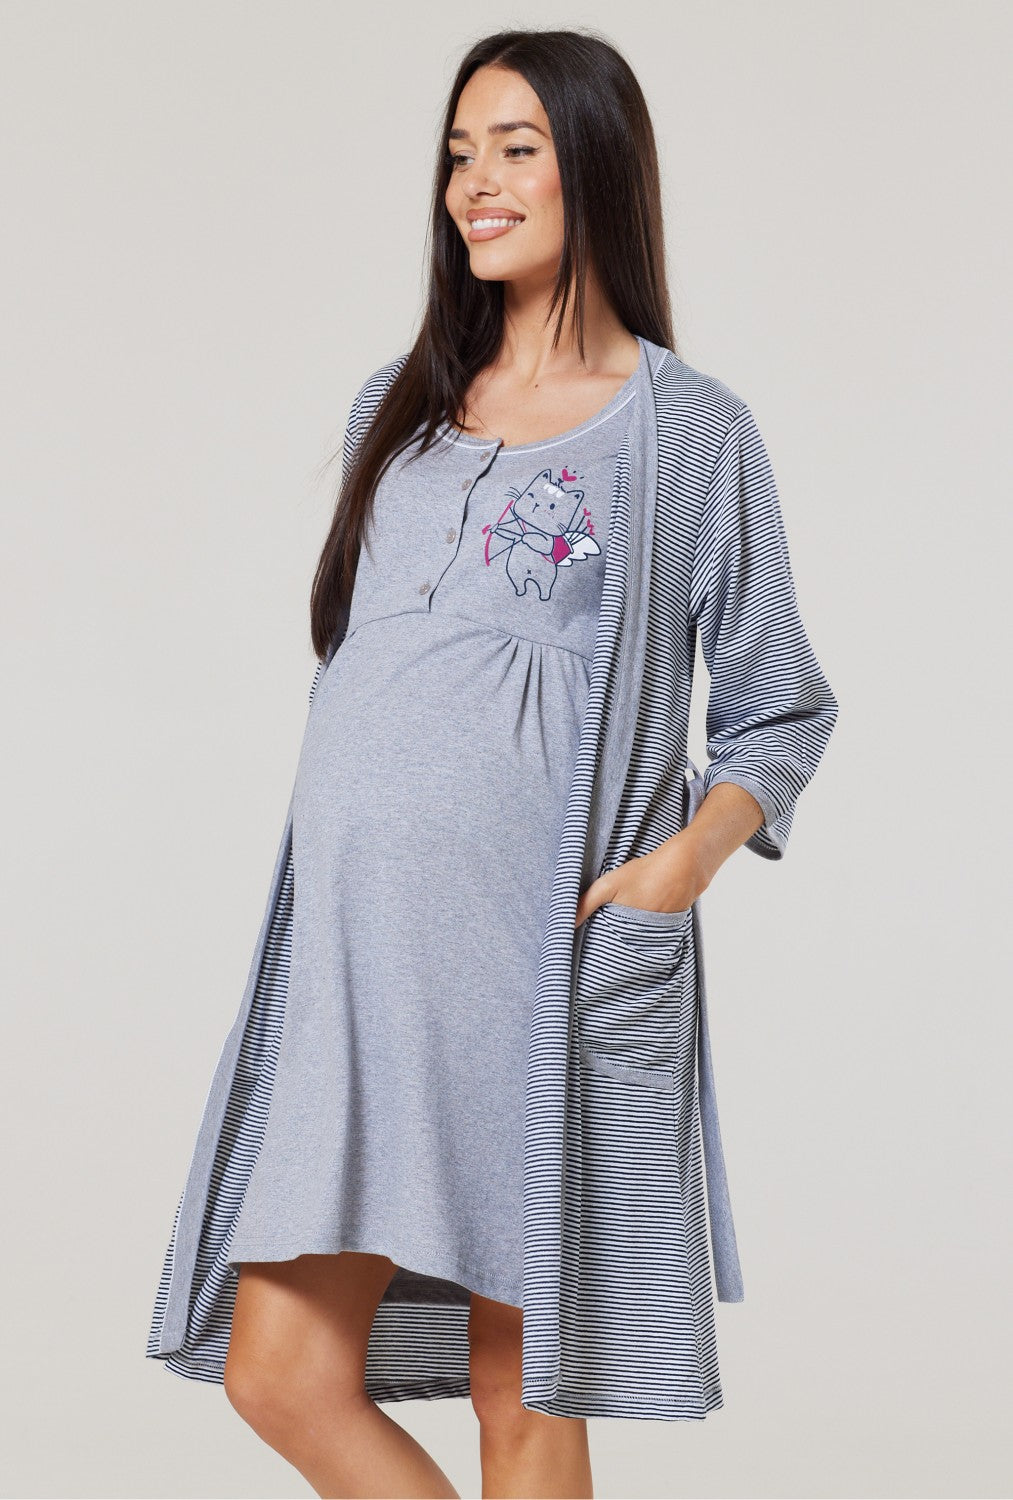 Maternity Hospital Gown Robe Nightie Set Labour & Birth